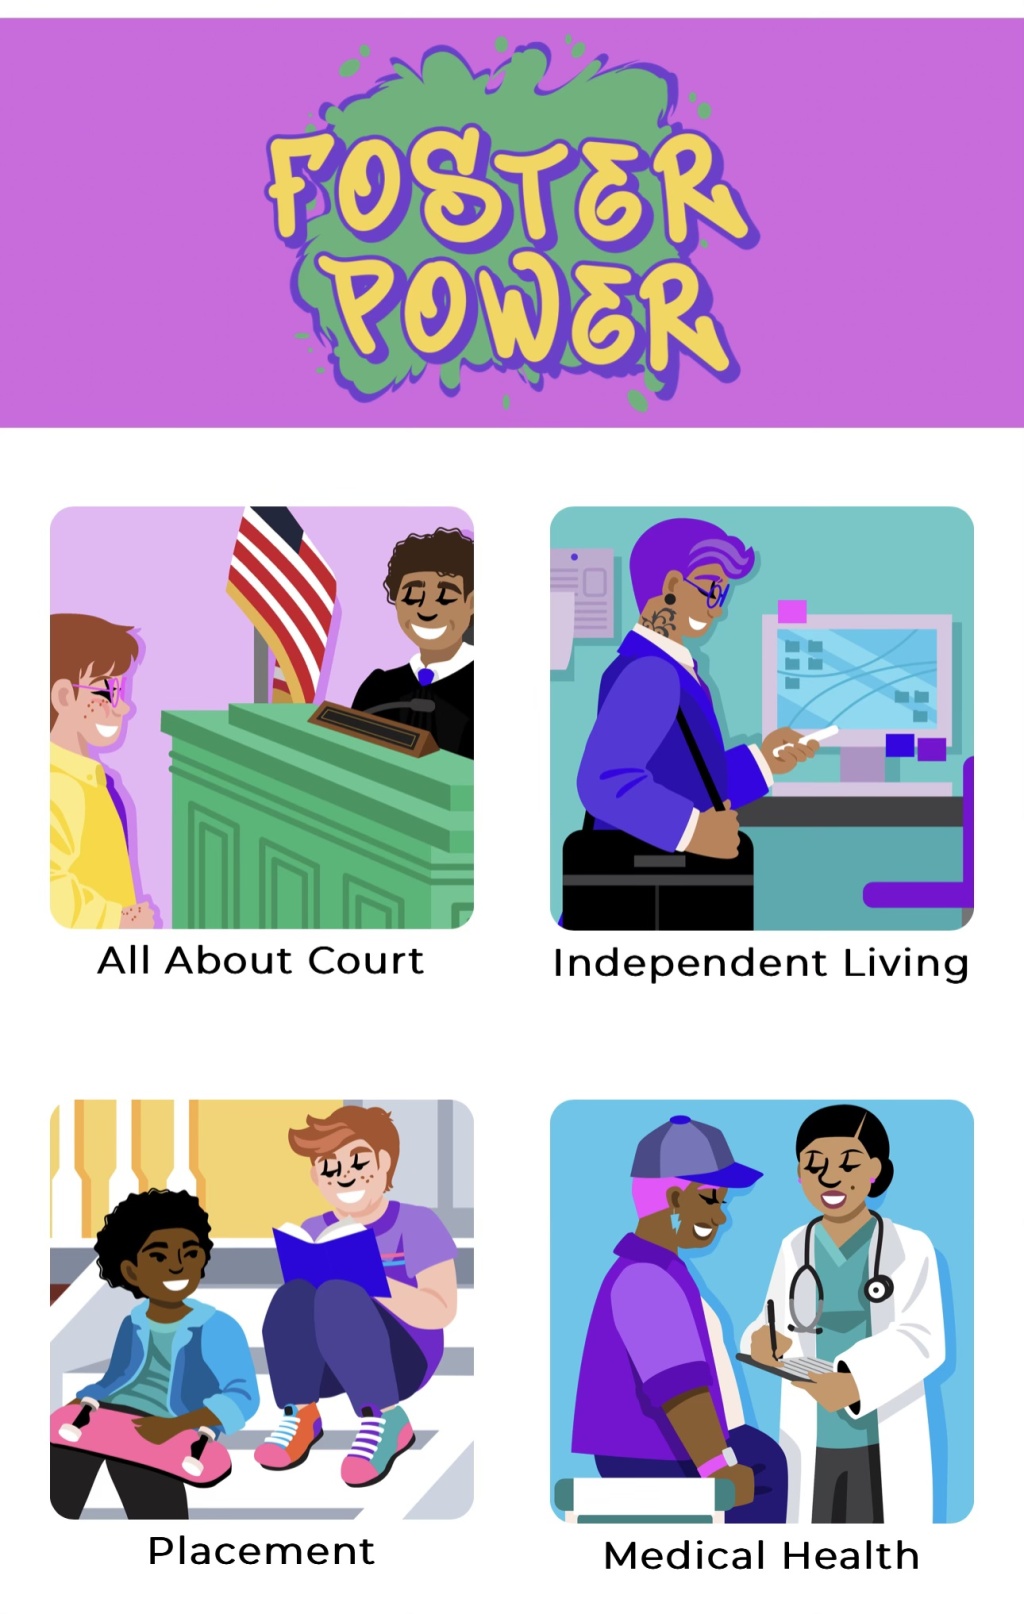 FosterPower: App Educates Foster Children About Their Rights